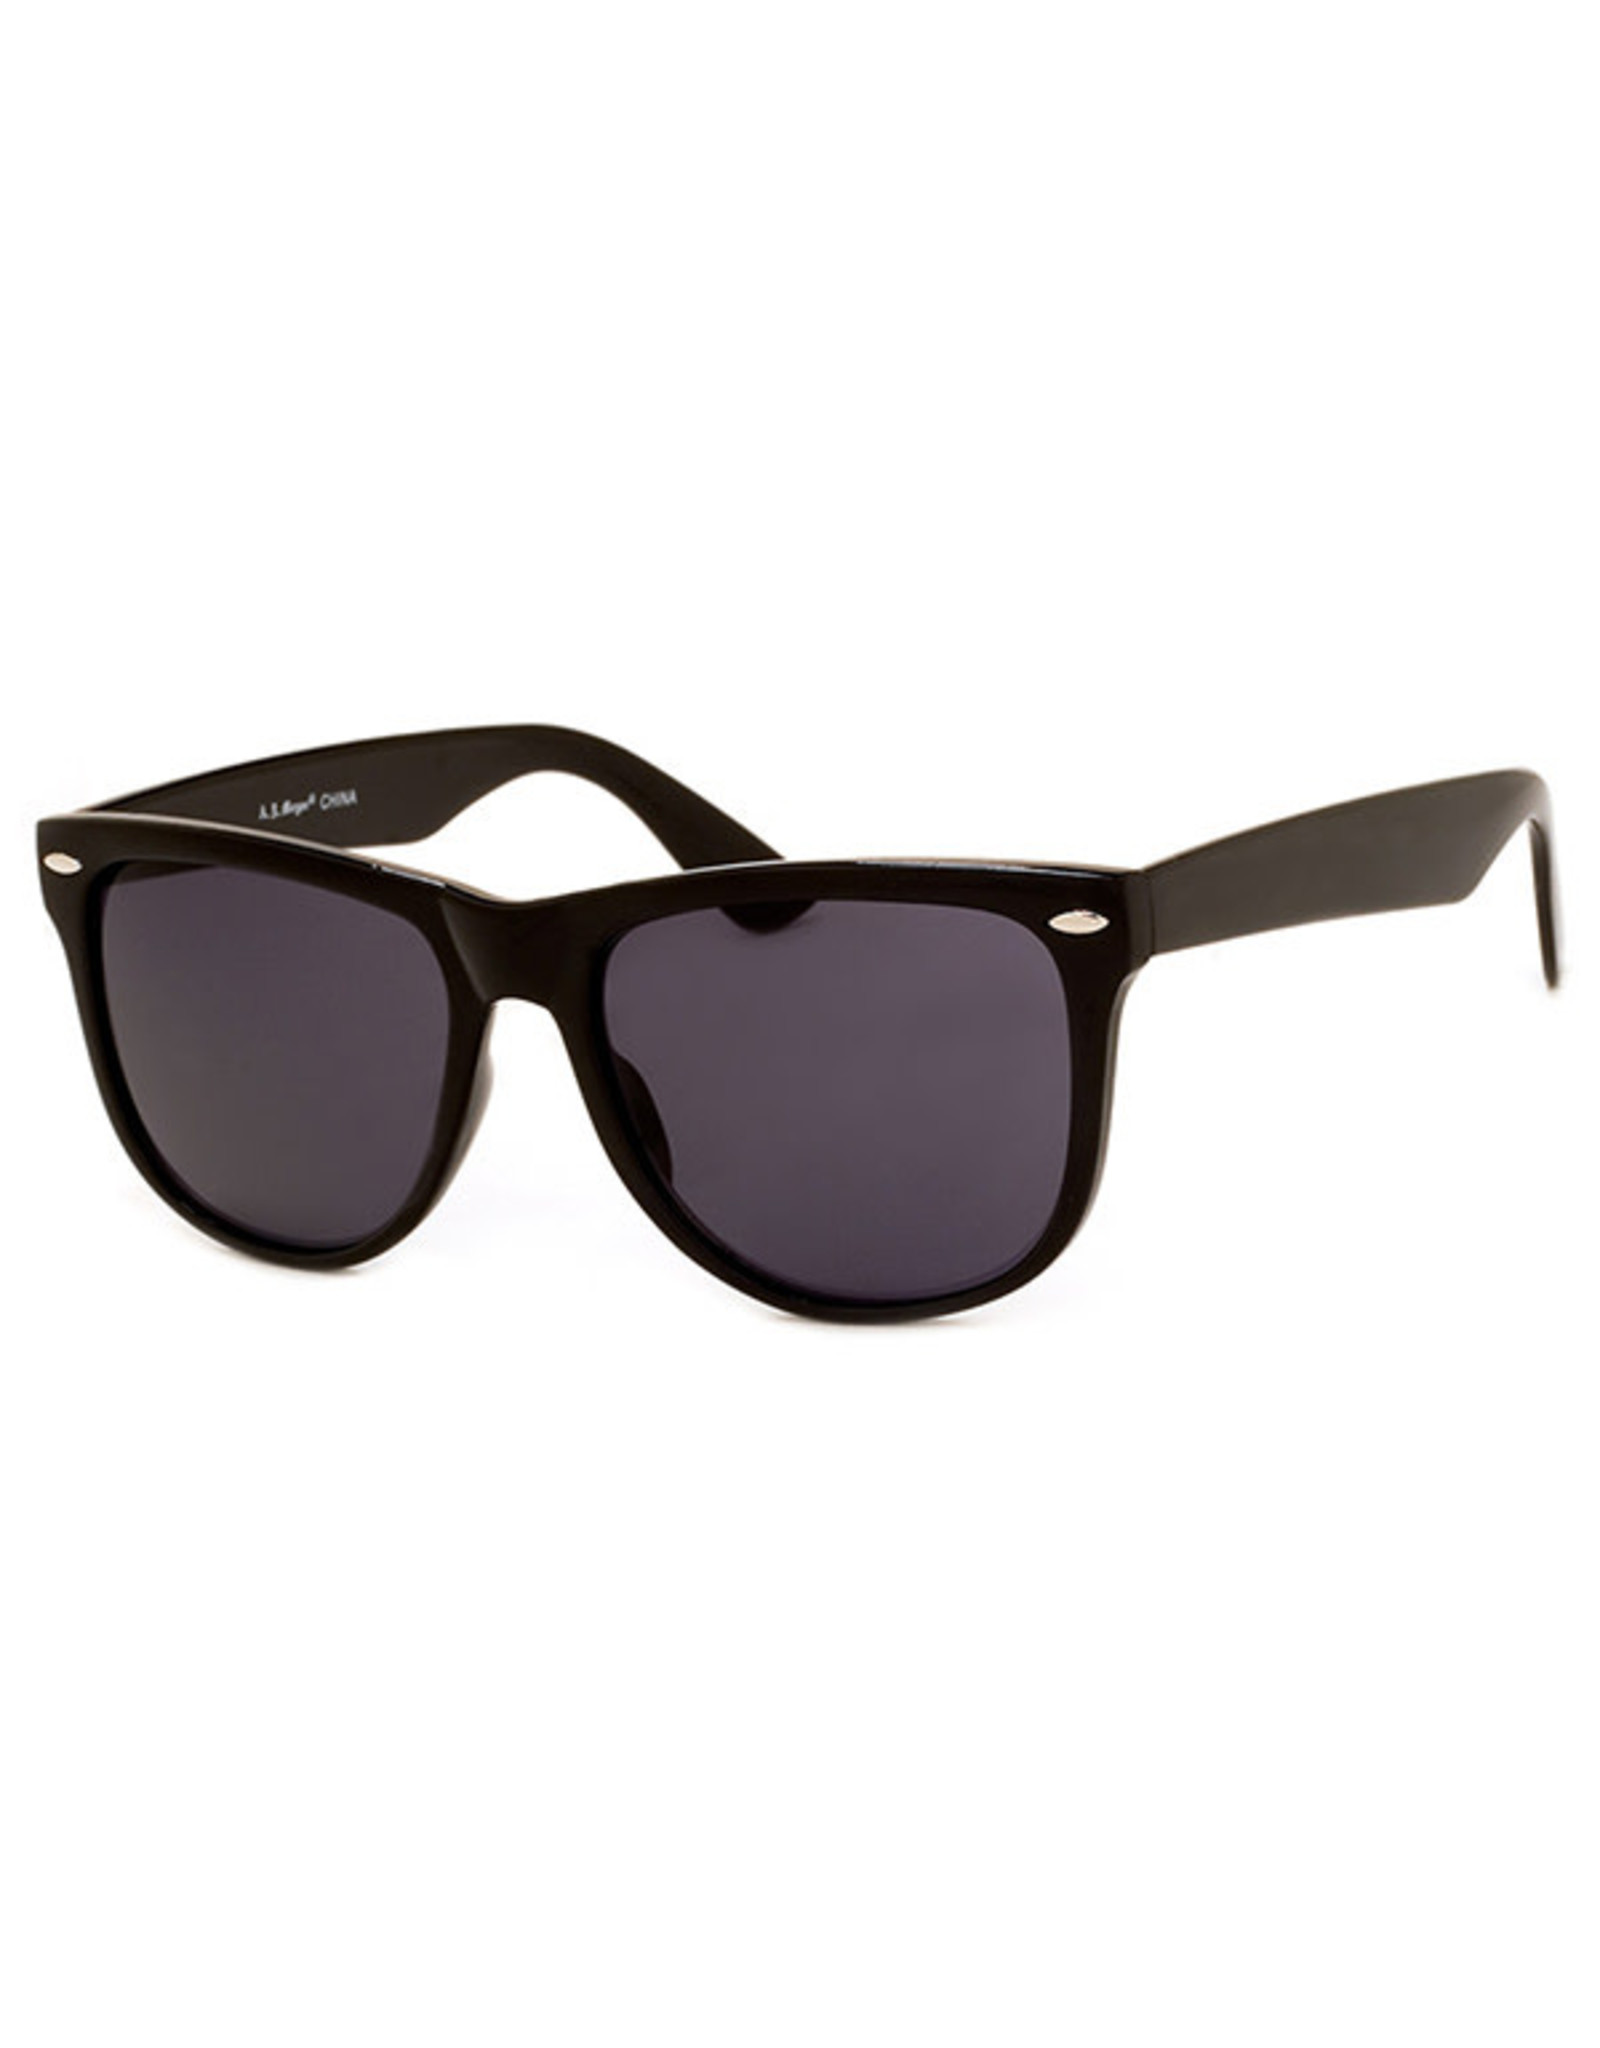 AJM - Wayfarer Frame Sunglasses